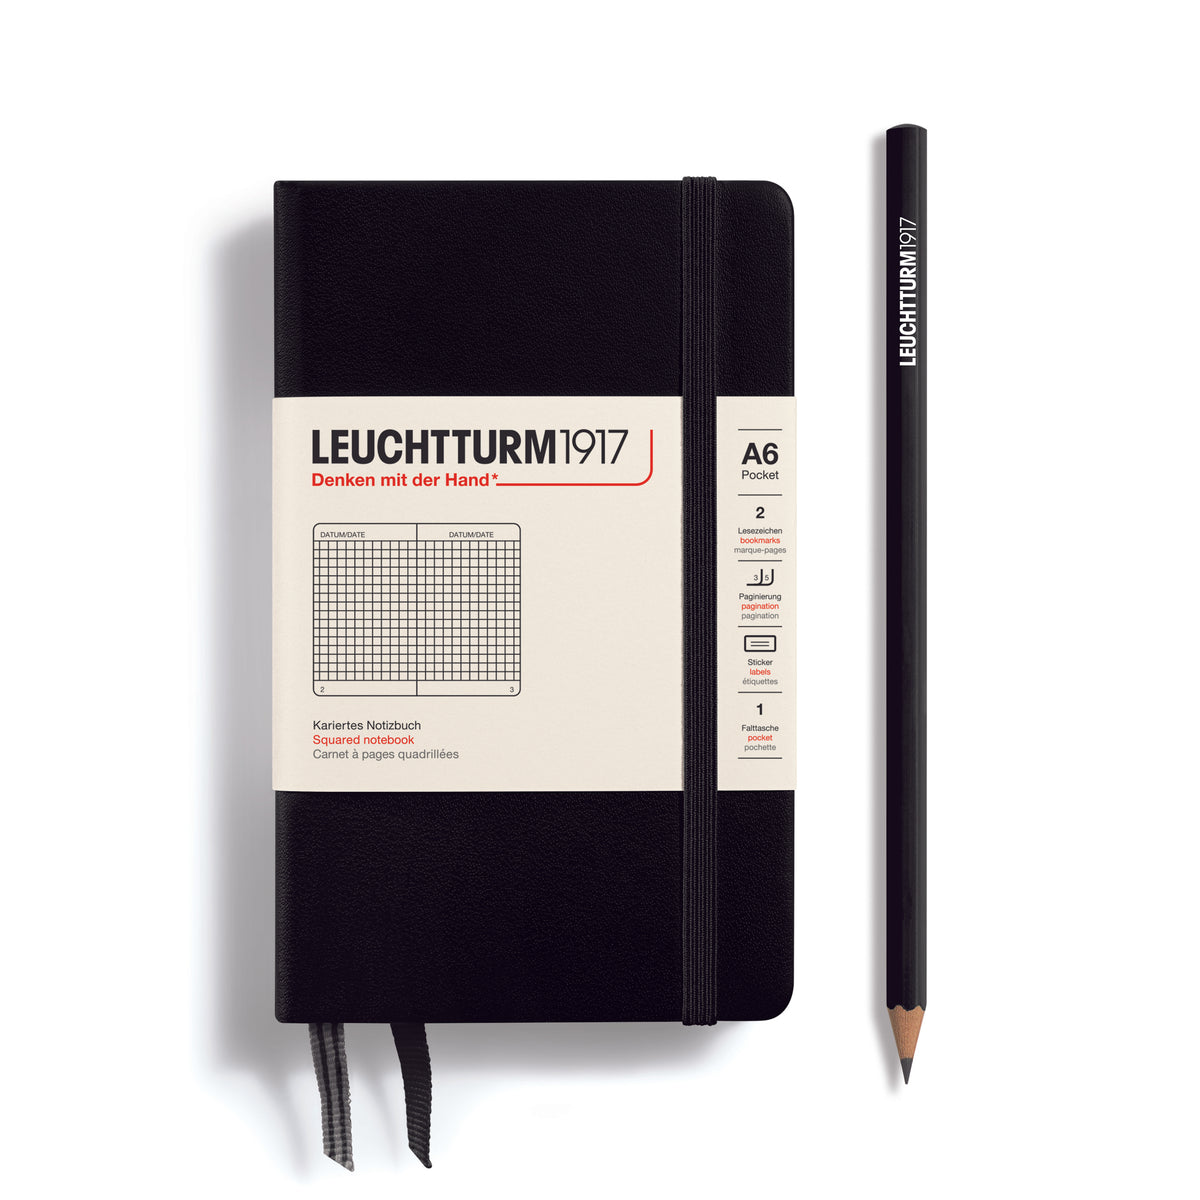 Leuchtturm1917 Notebook A6 Pocket Hardcover in black - Penny Black - squared ruling